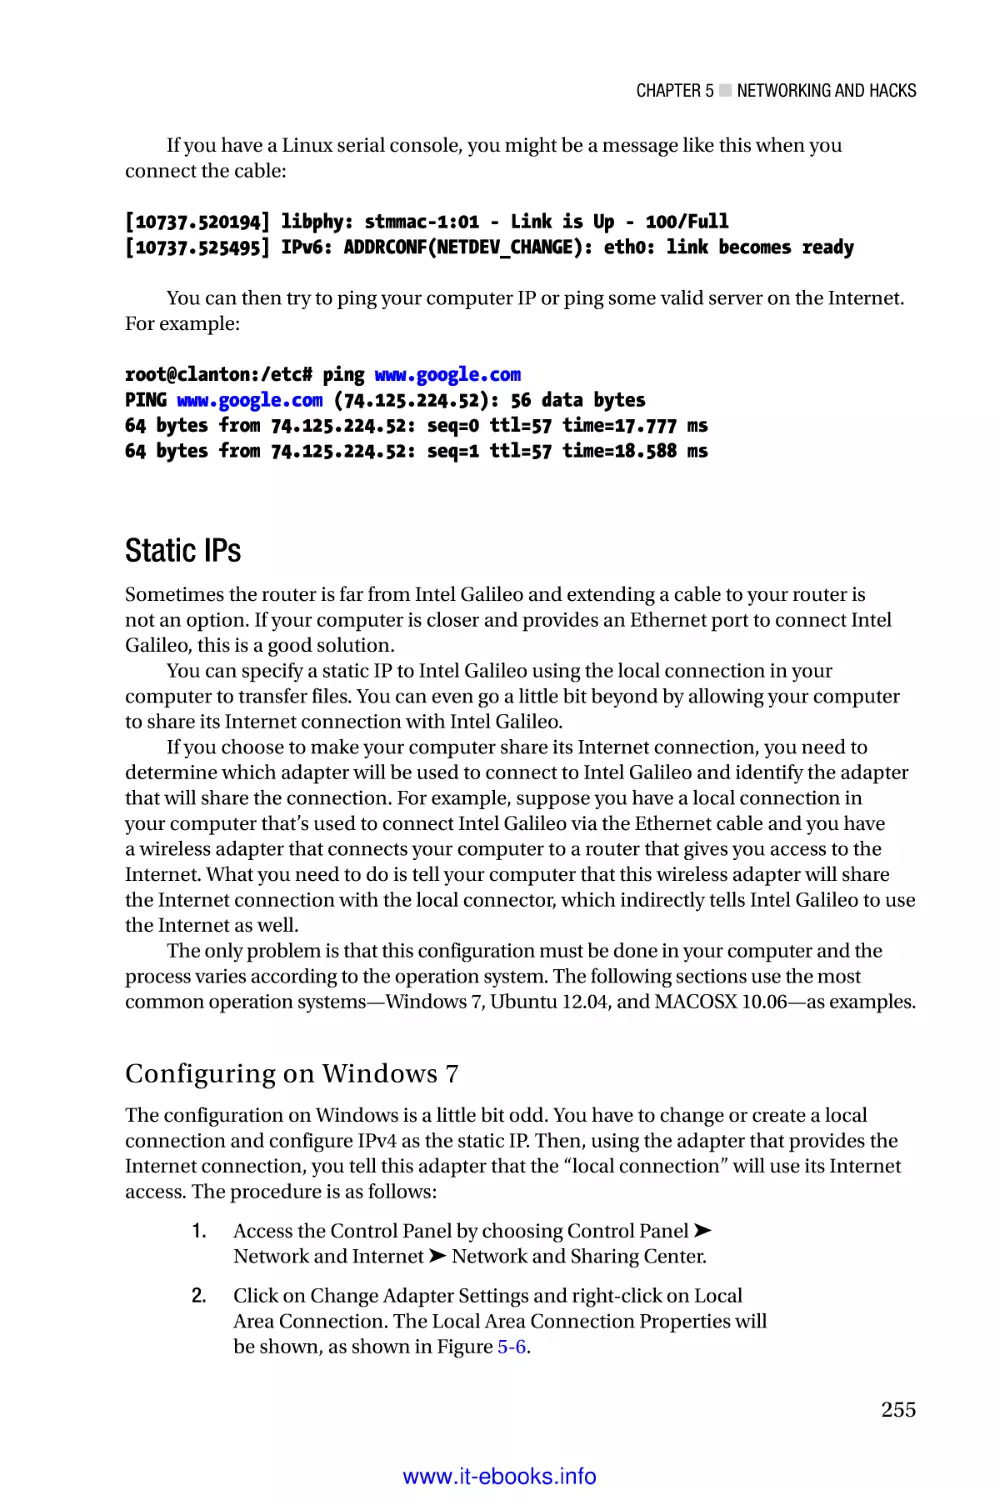 Static IPs
Configuring on Windows 7